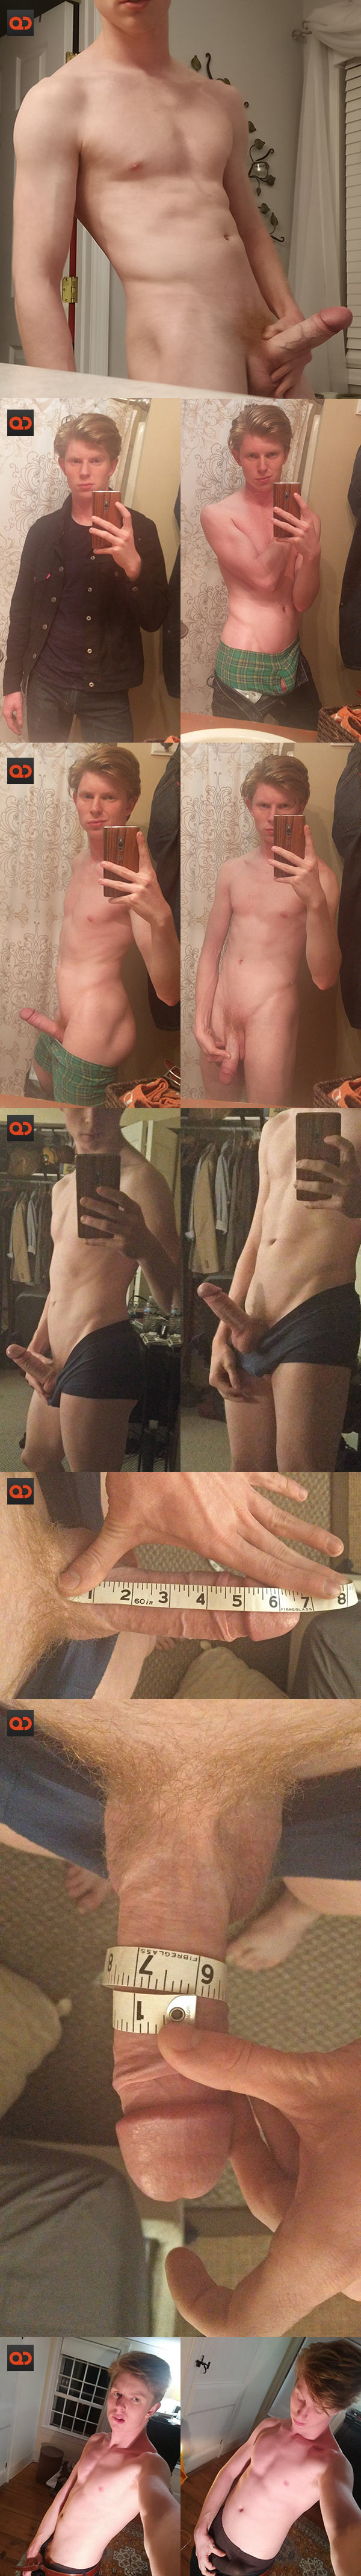 QC’s Nude Boyfriend of the Week